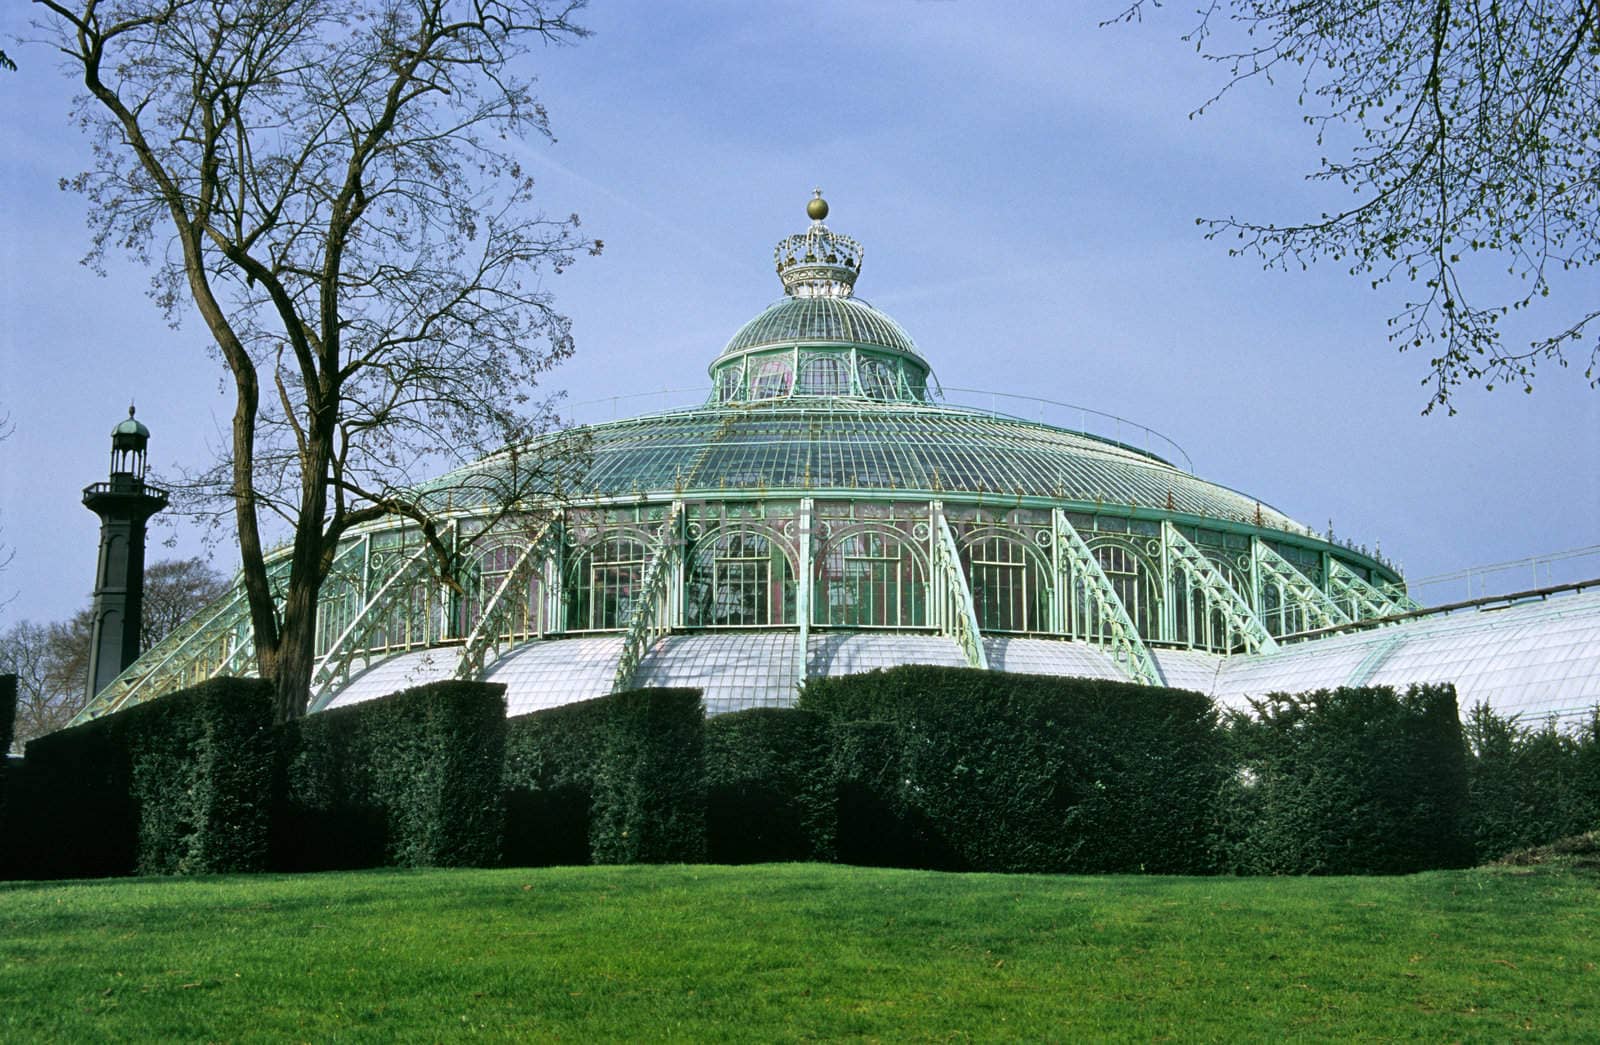 The giant glass dome of the Royal Botanical Gardens is a popular landmark in Laeken, Belgium.